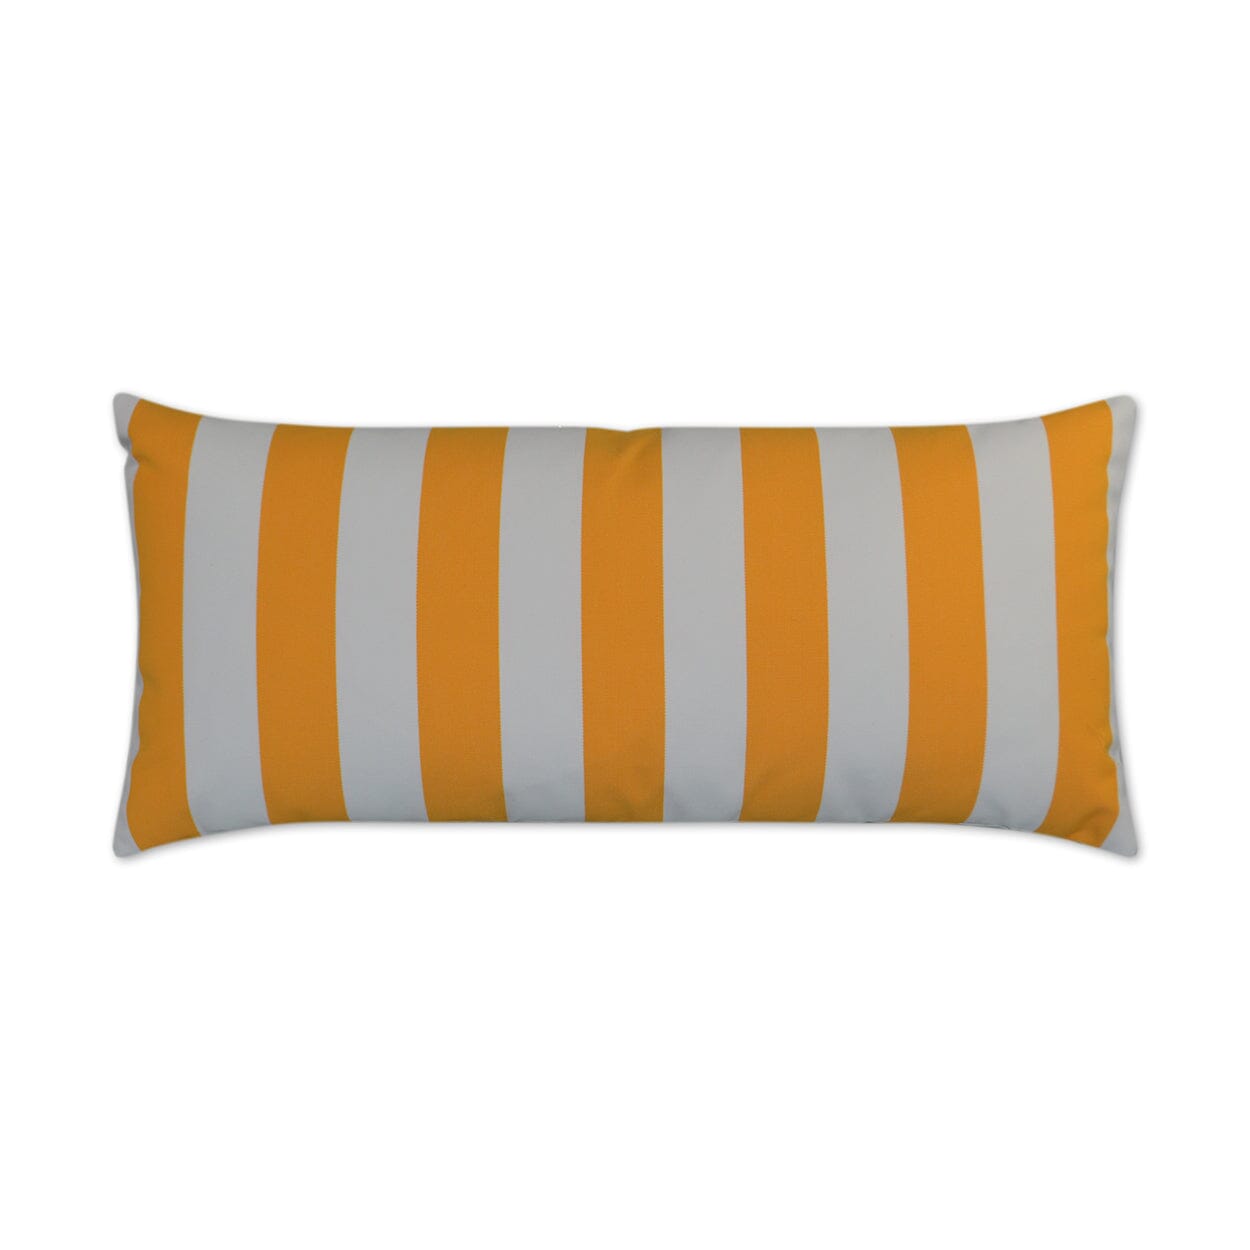 D.V. Kap 12" x 24" Outdoor Lumbar Pillow | Café Stripe Yellow Pillows D.V Kap Outdoor